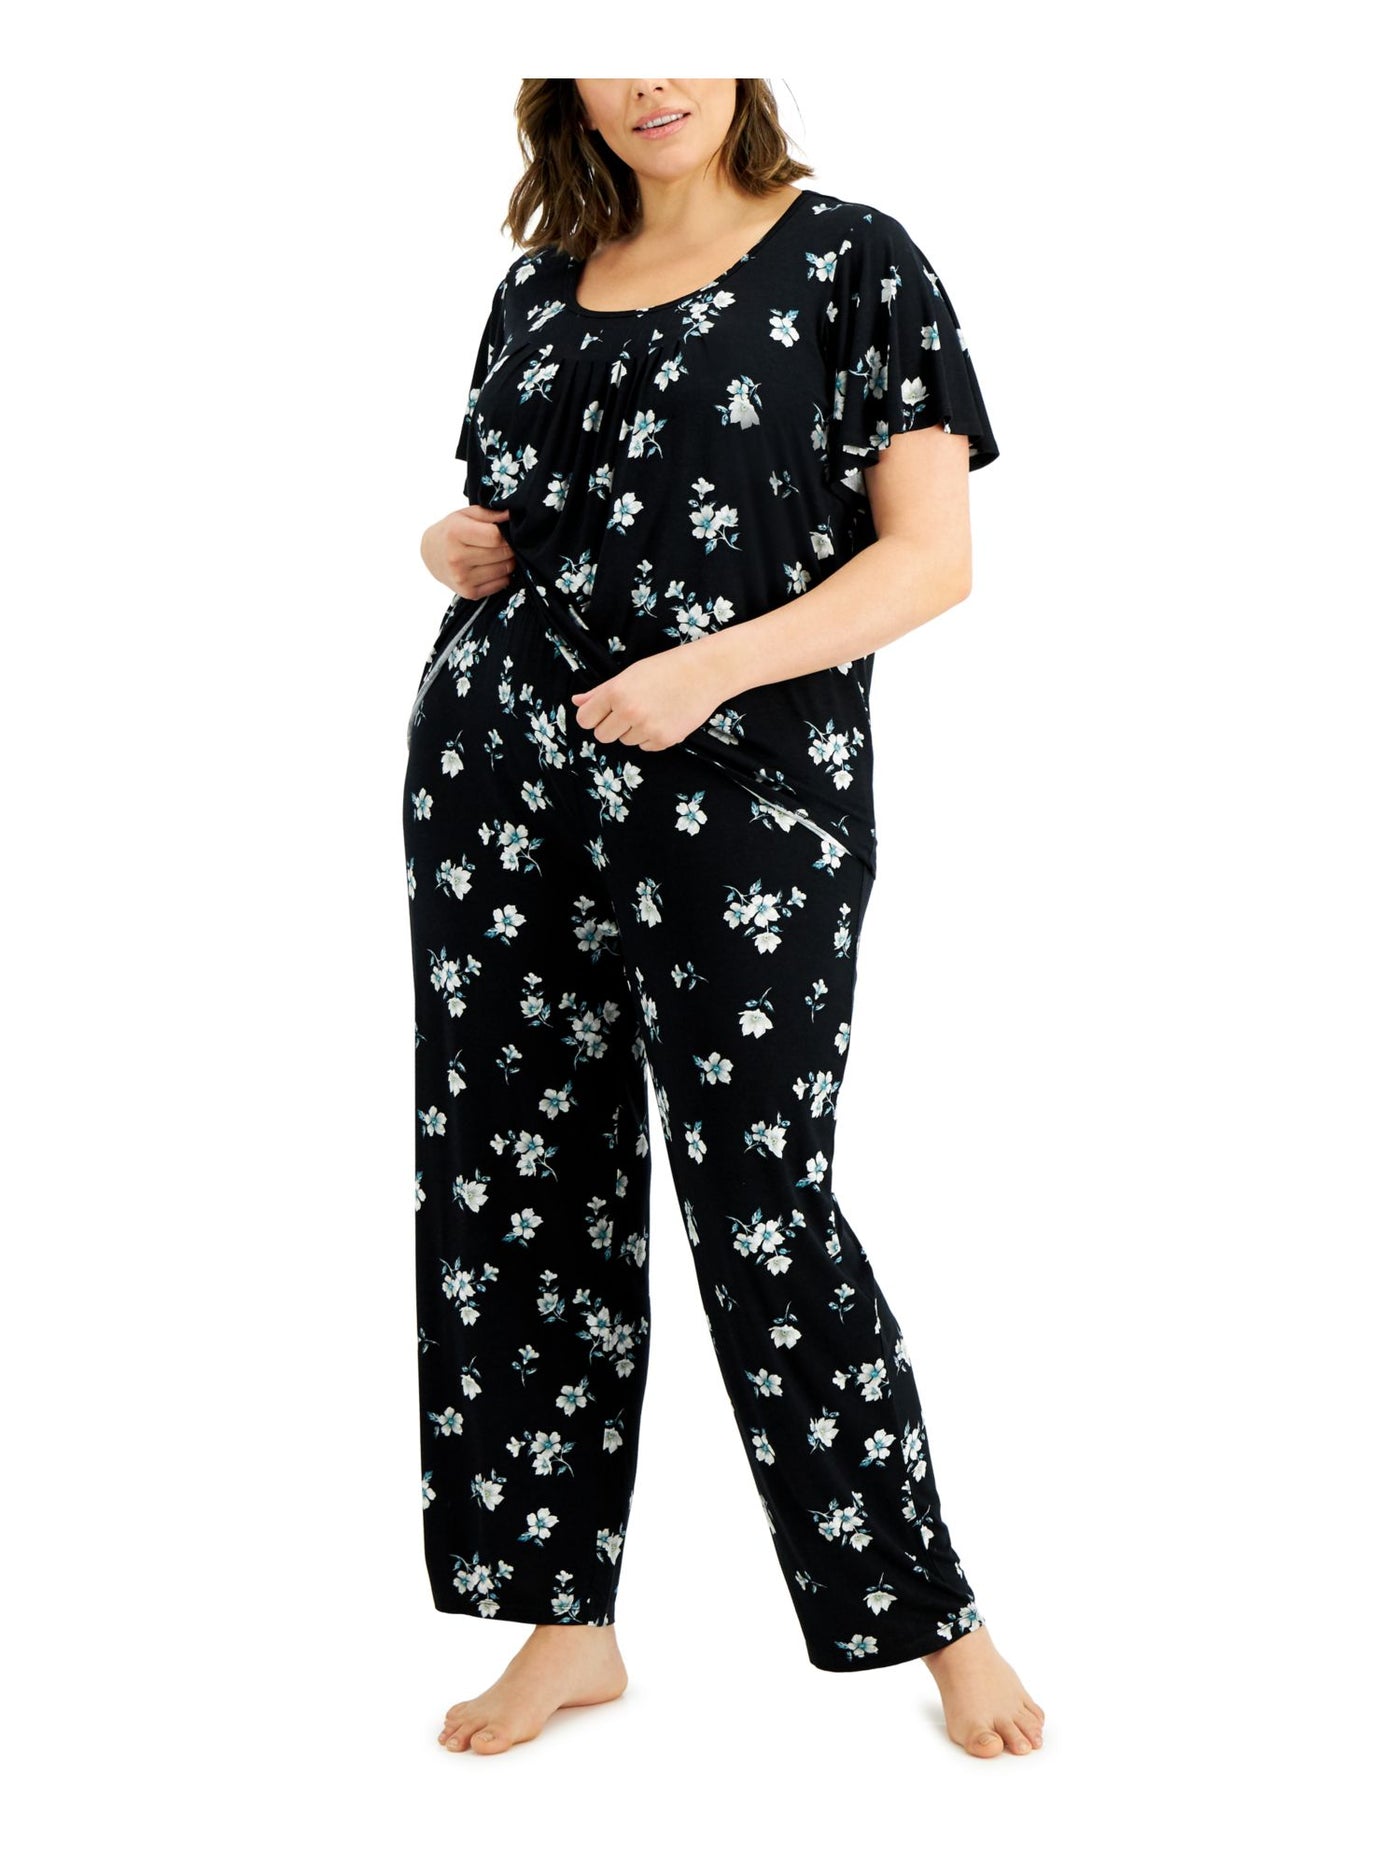 CHARTER CLUB Womens Black Floral T-Shirt Top Straight leg Pants Pajamas Plus 1X